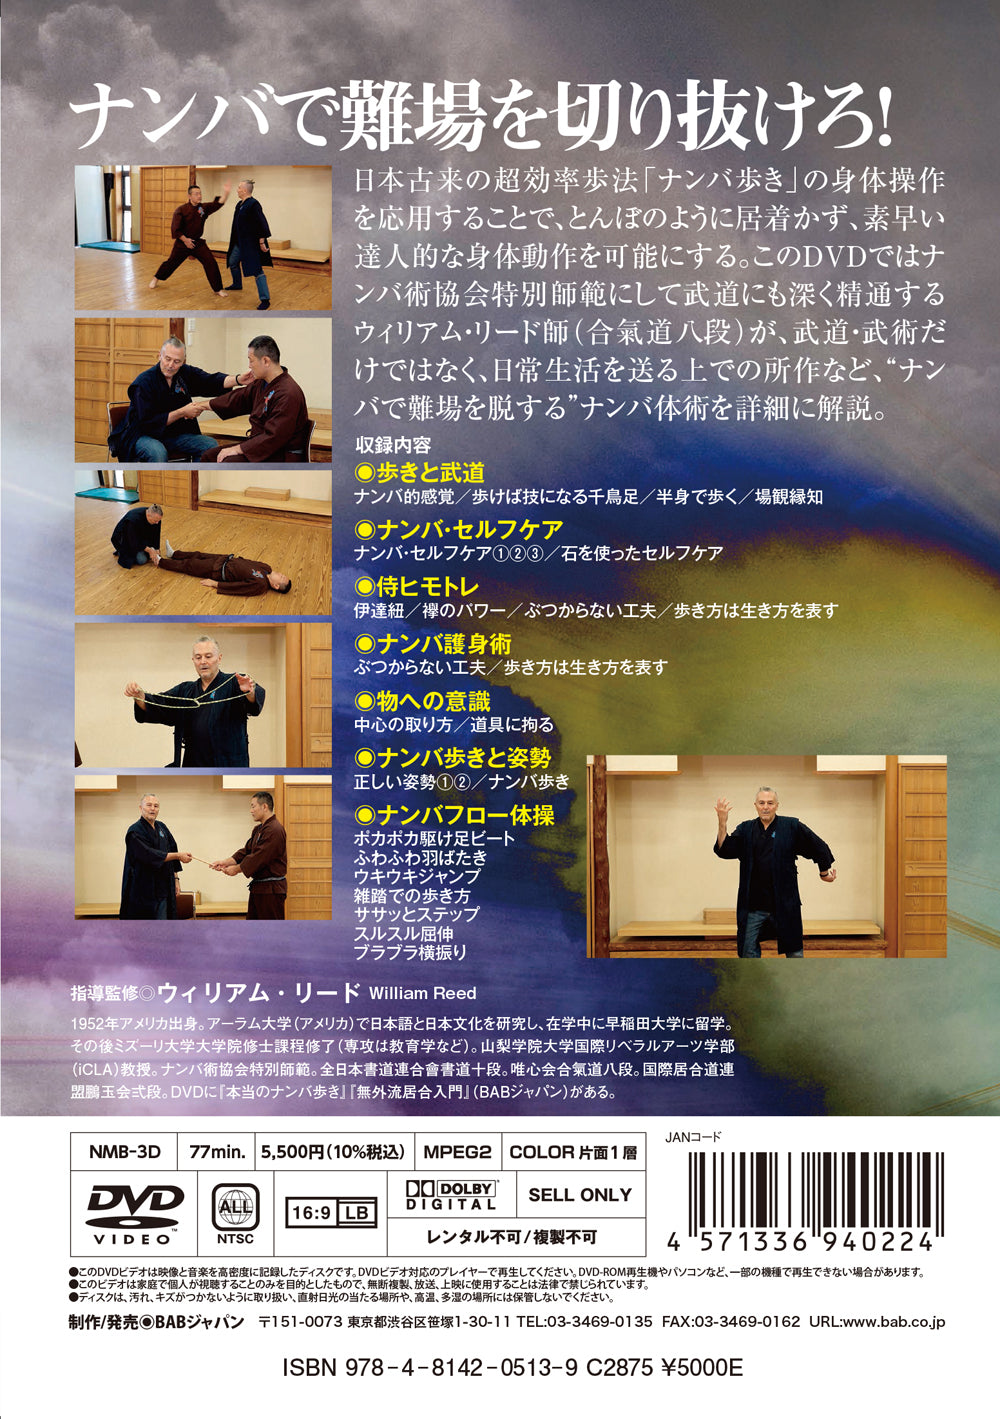 El DVD Samurai Walk Nanba de William Reed